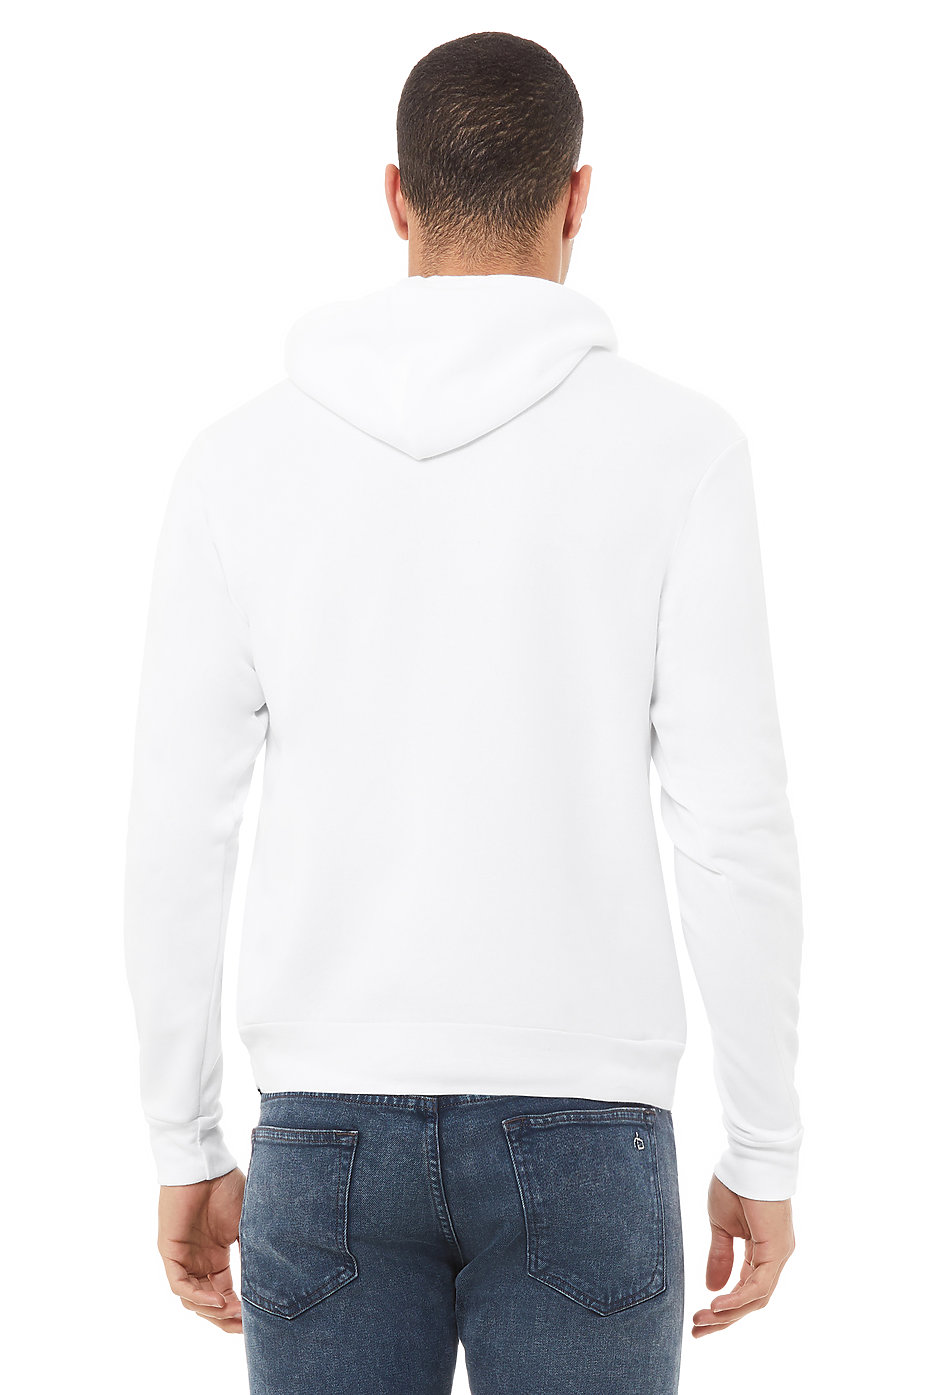 New White Plain Hoodie Hooded Pullover Sweatshirt Solid White Fleece Cotton M-2X